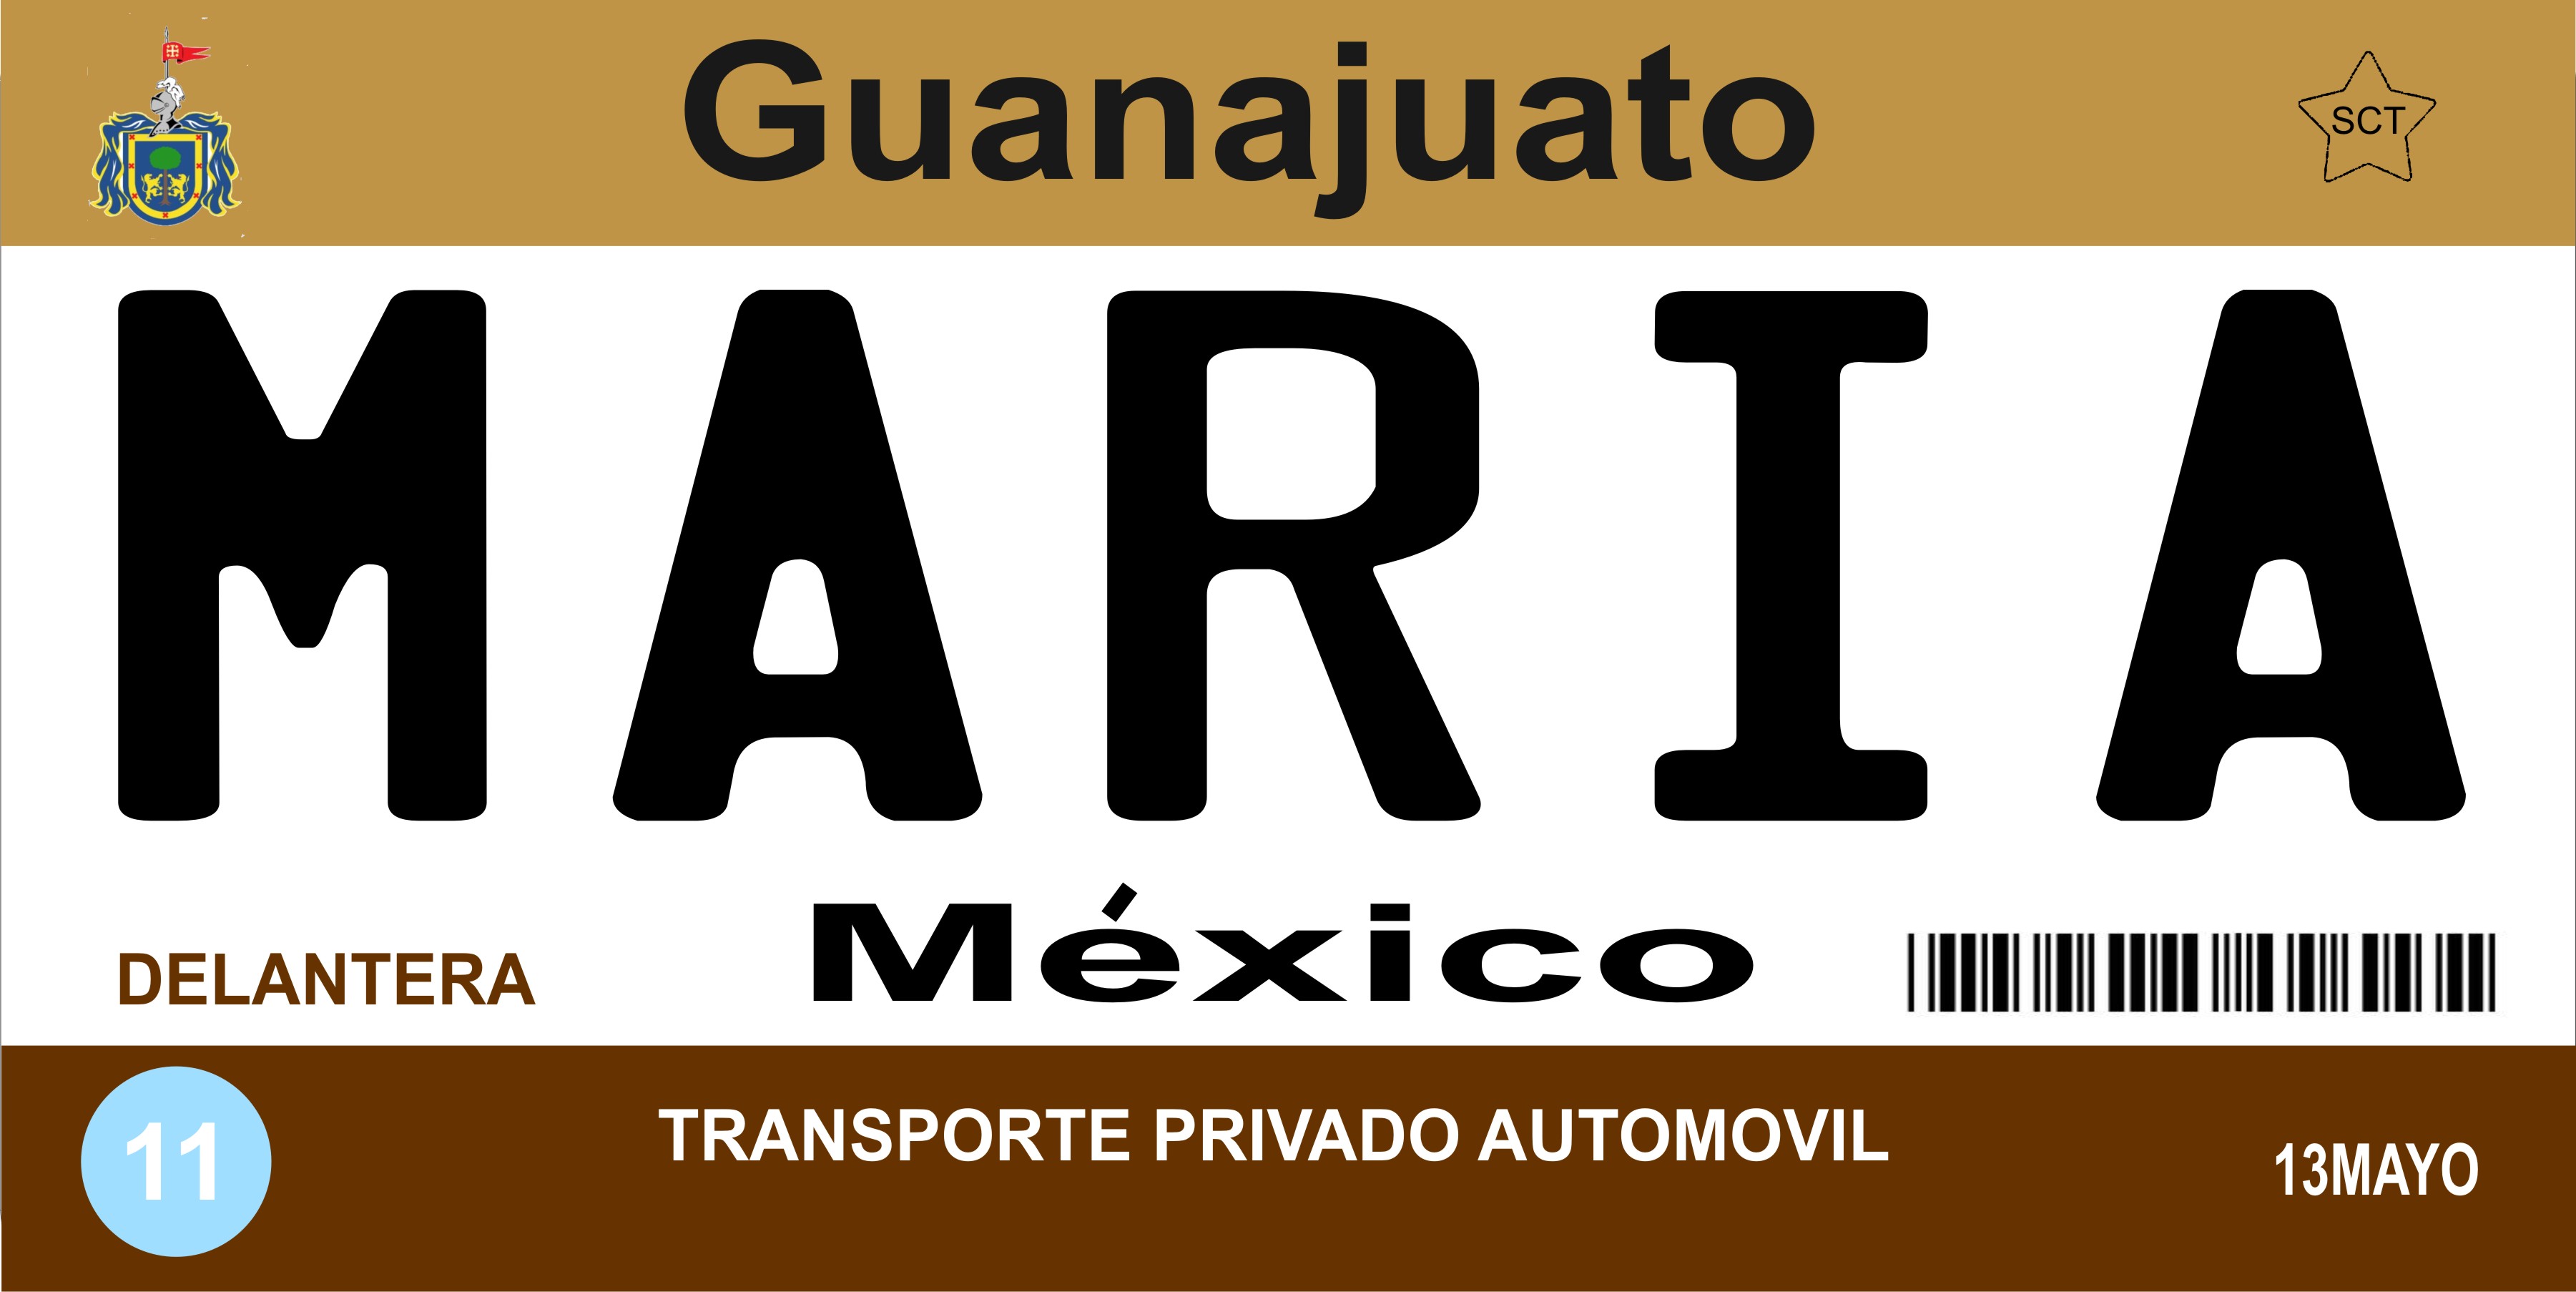 Mexico Guanajuato Photo LICENSE PLATE Free Personalization on this PLATE